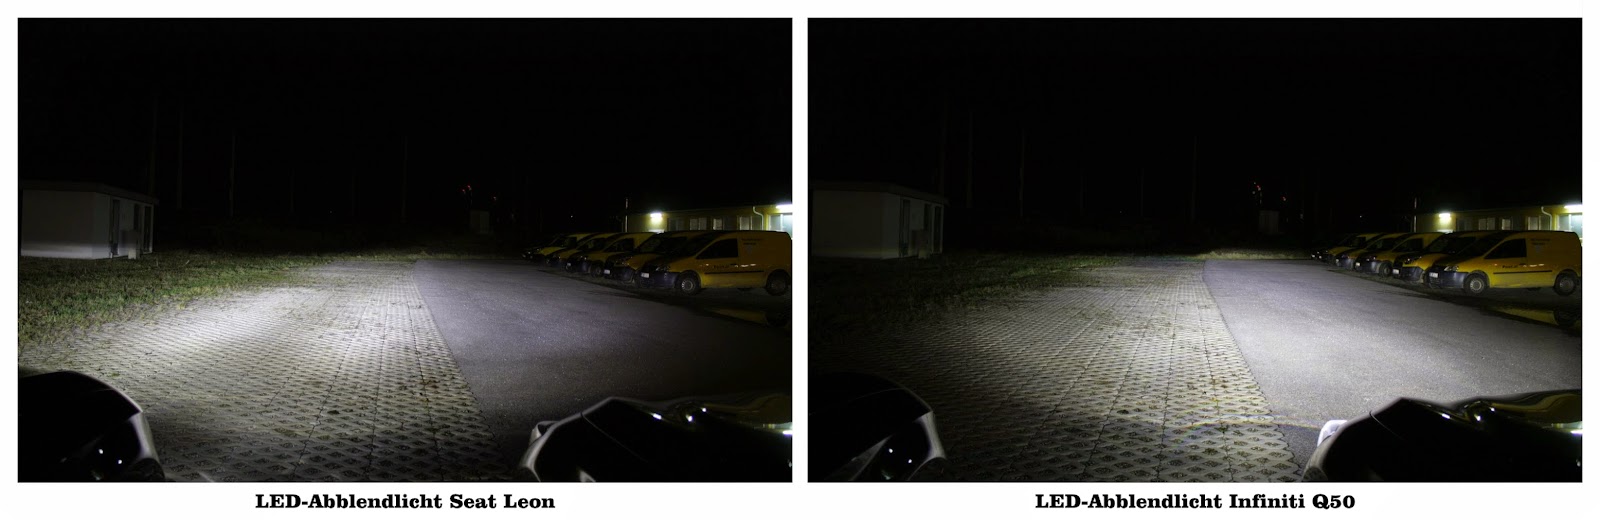 LED-Abblendlicht Seat Leon & Infiniti Q50 | Photo © Raphael Gürth/autofilou.at